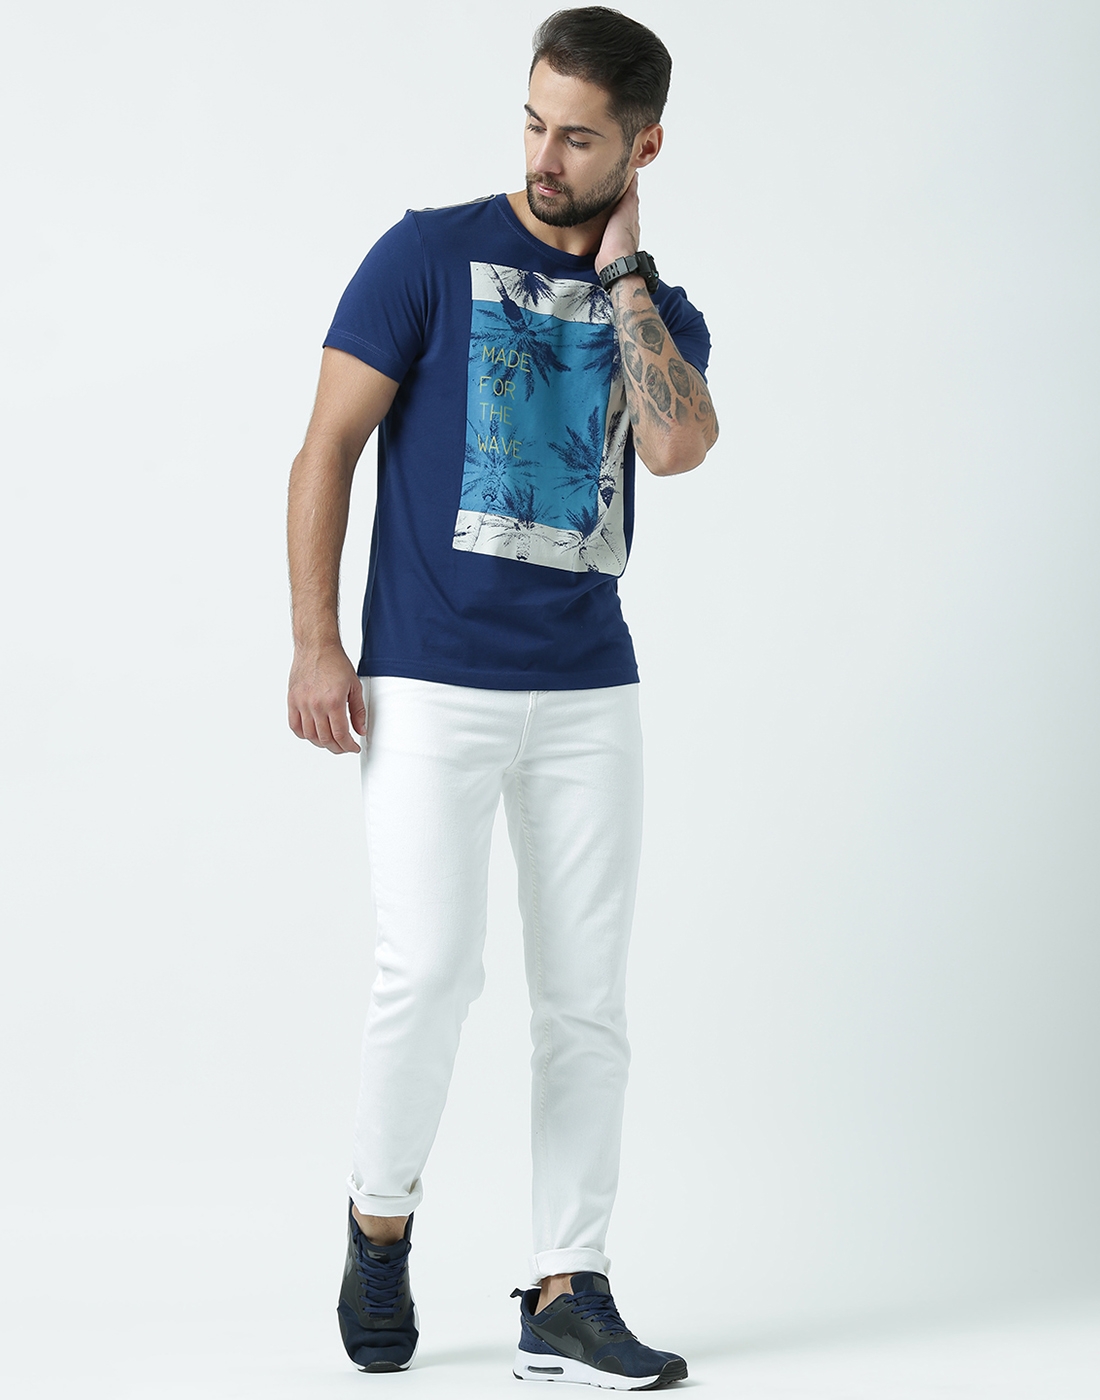 HUETRAP | Huetrap Men's Graphic Round Neck Short Sleeve Launch Navy T-Shirt 4